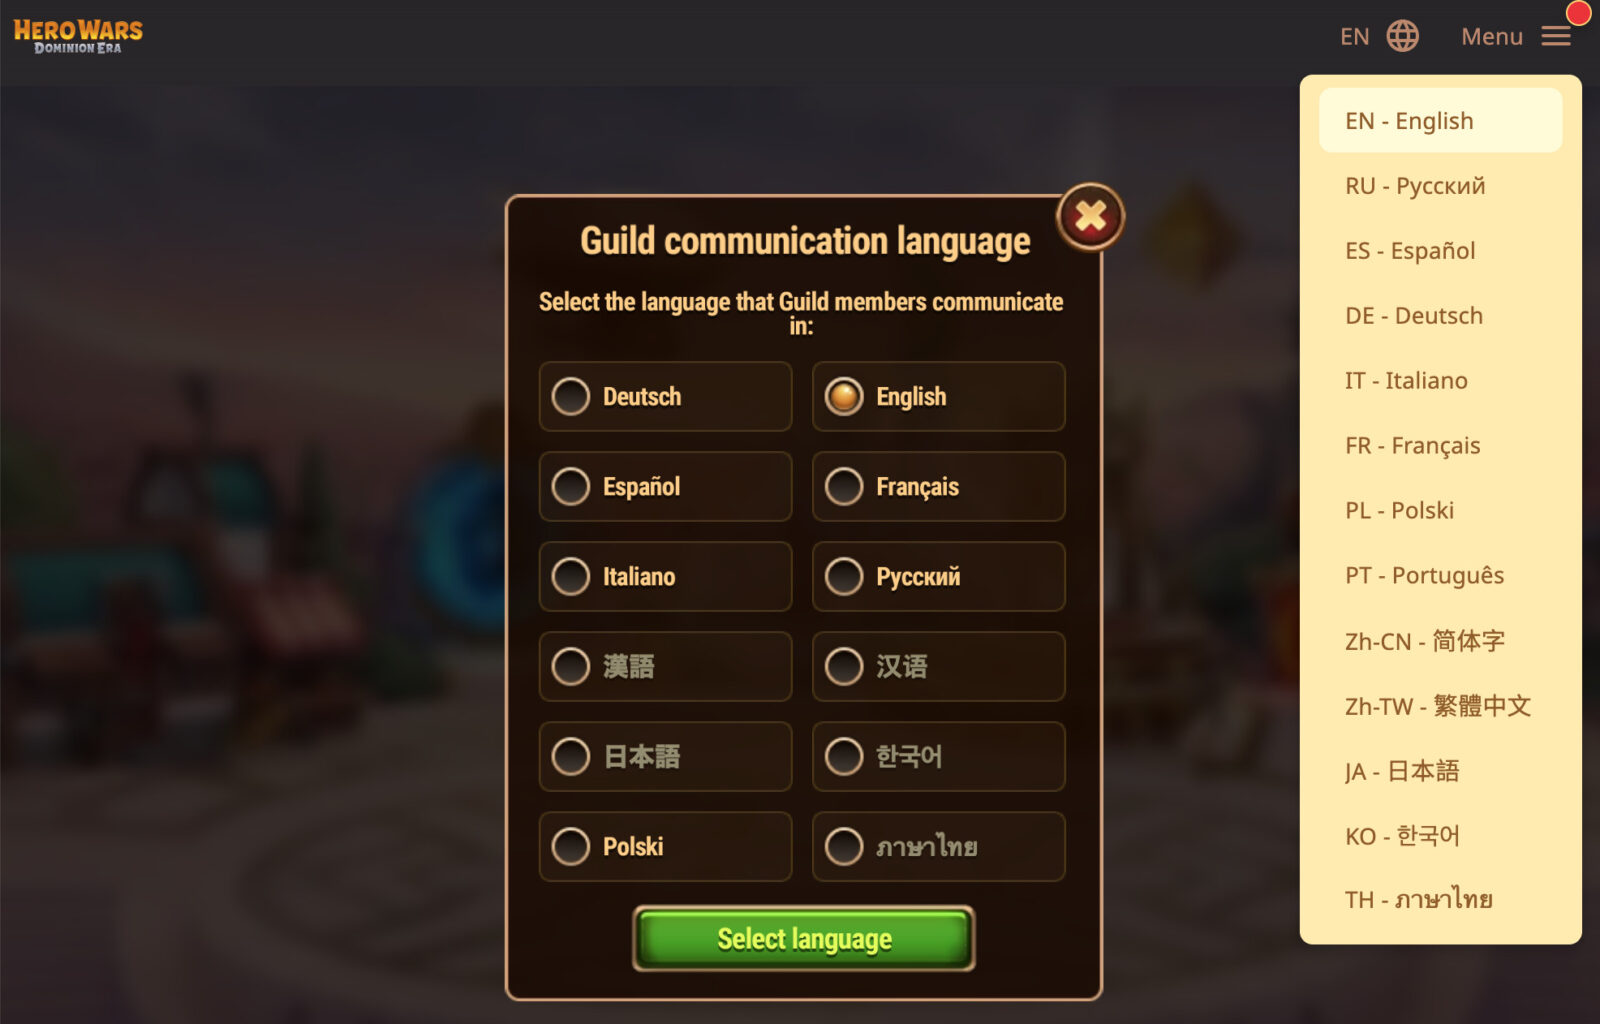 [Hero Wars Guide] Guild communication language